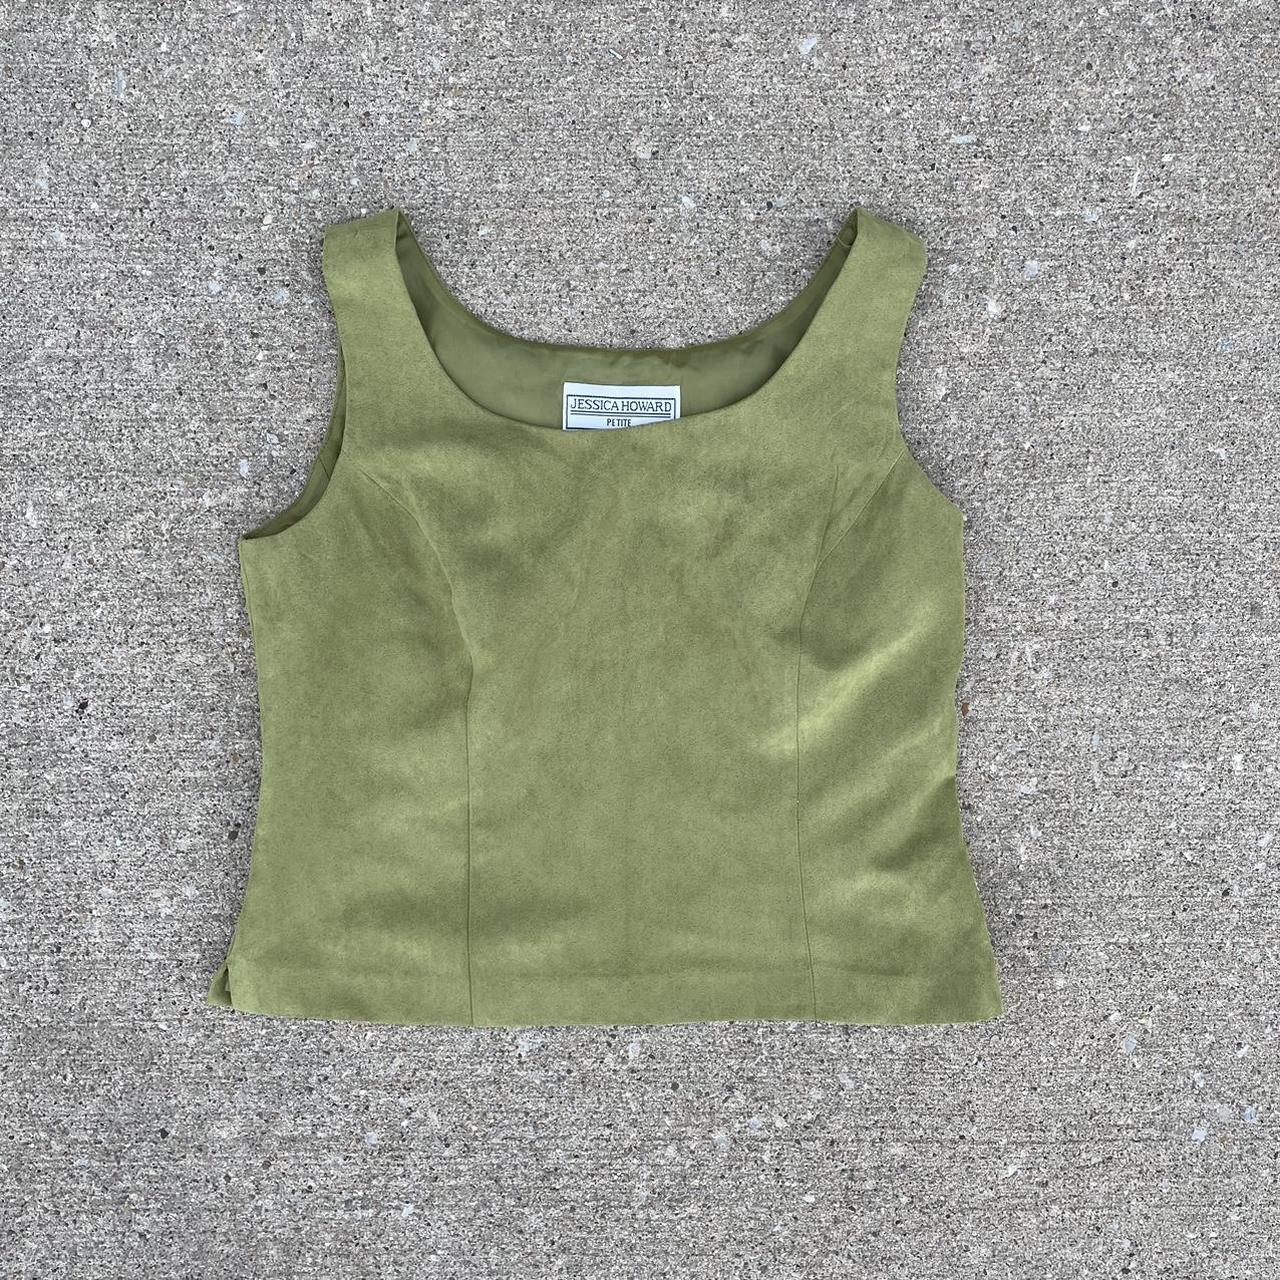 Jessica Howard Women's Green and Khaki Vest